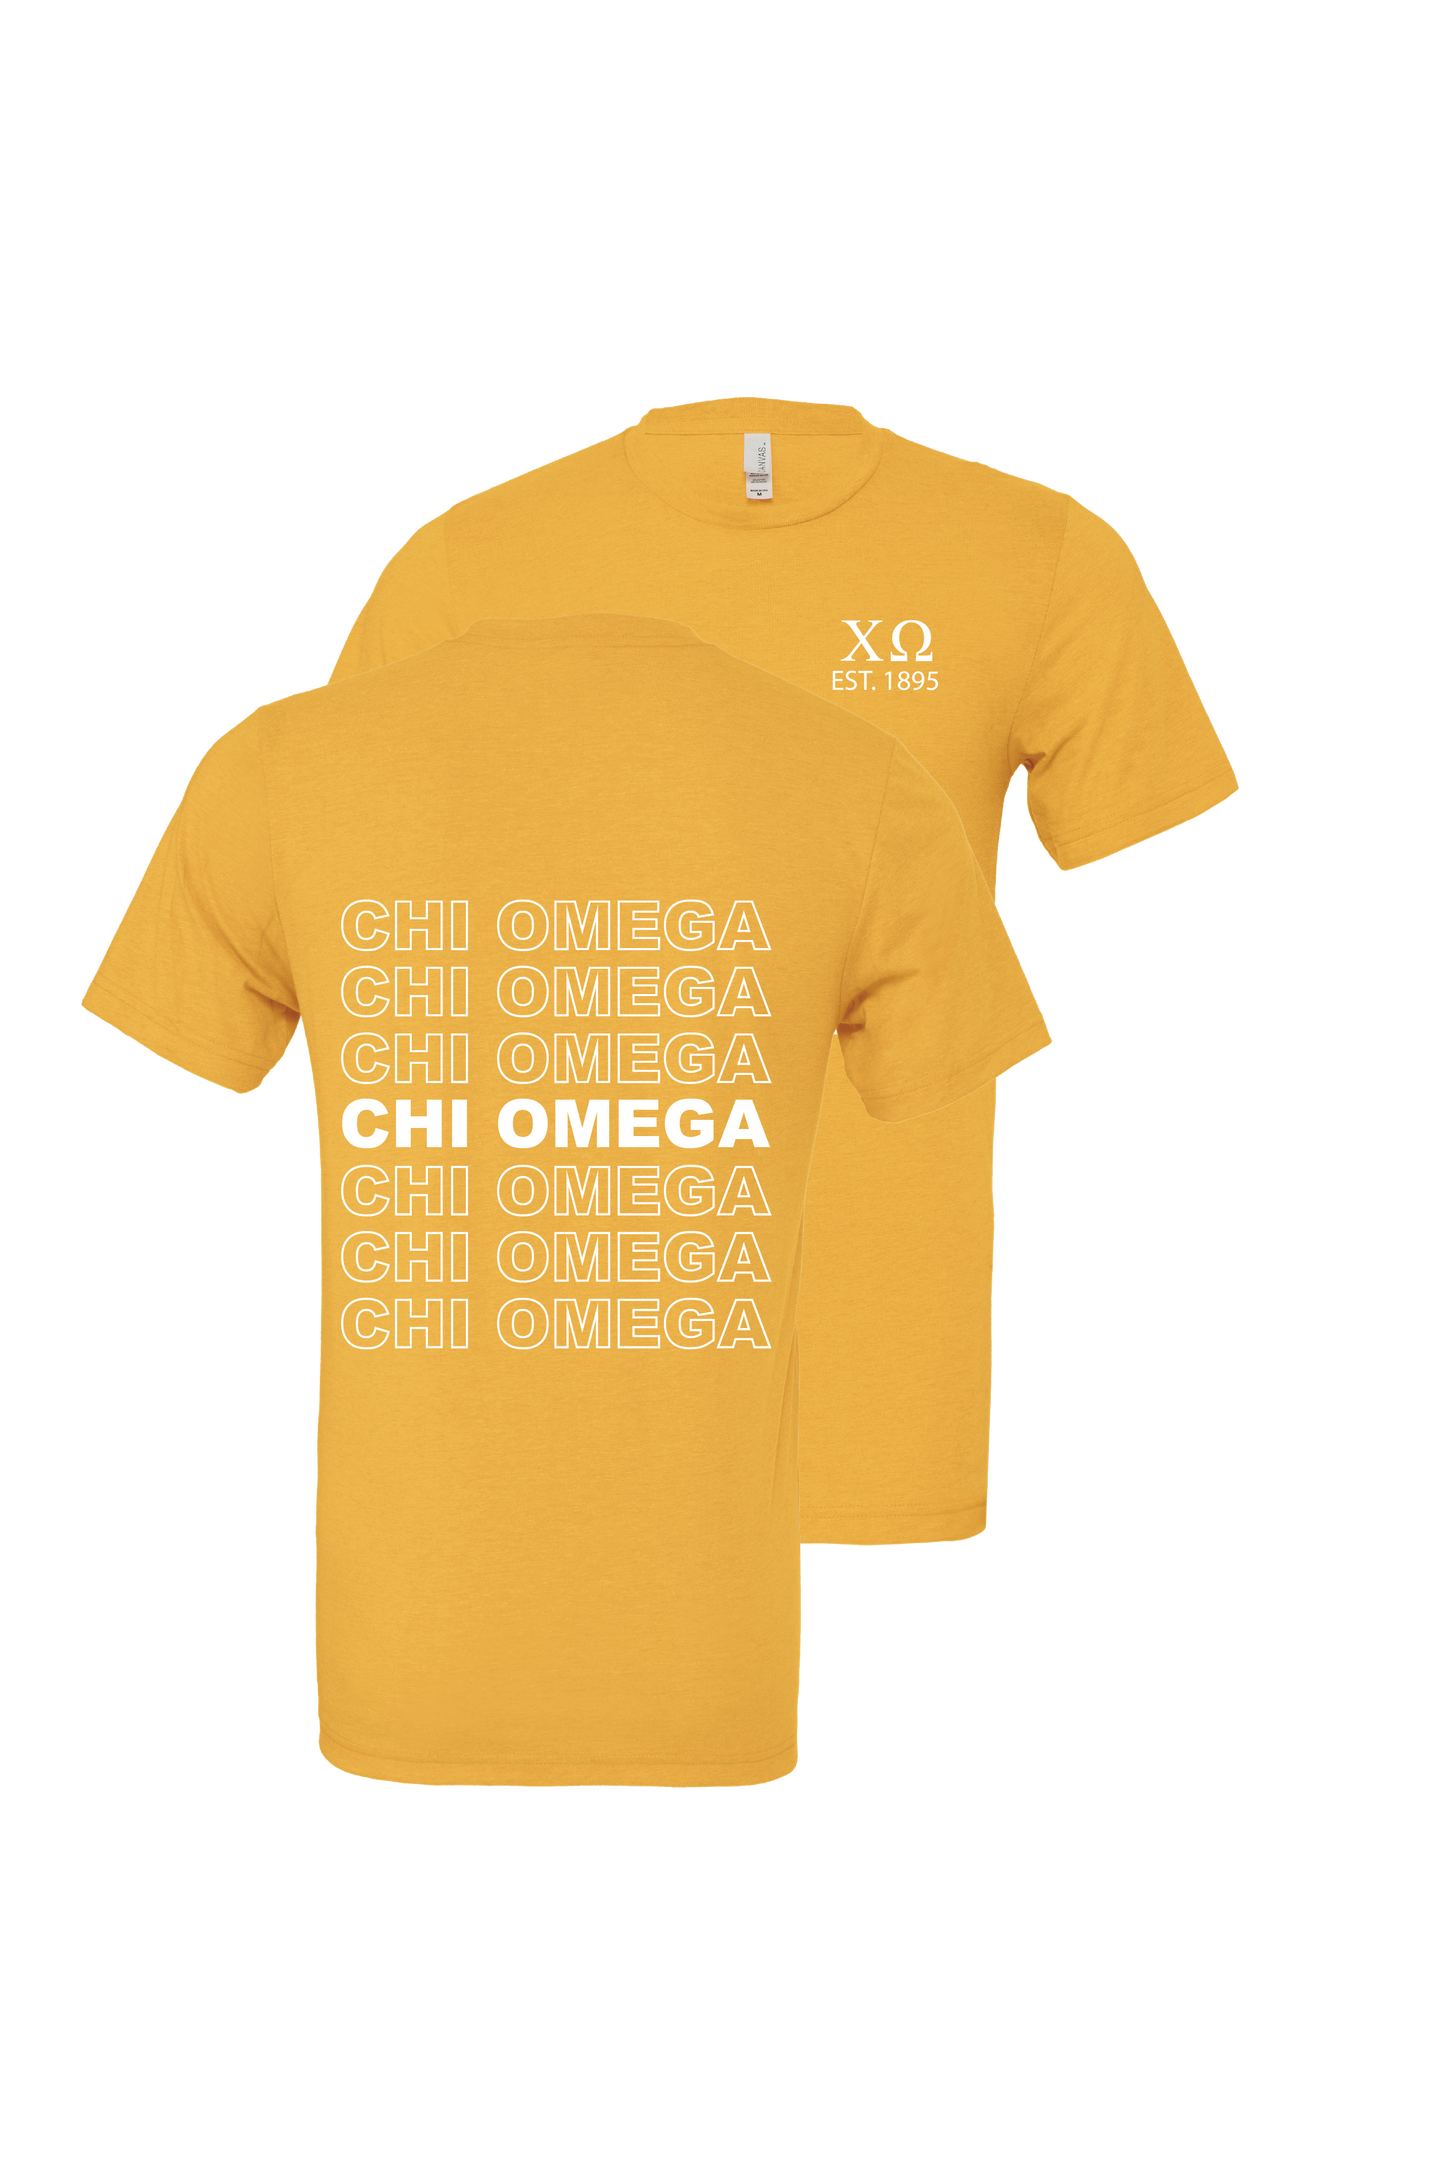 Chi Omega Repeating Name Short Sleeve T-Shirts